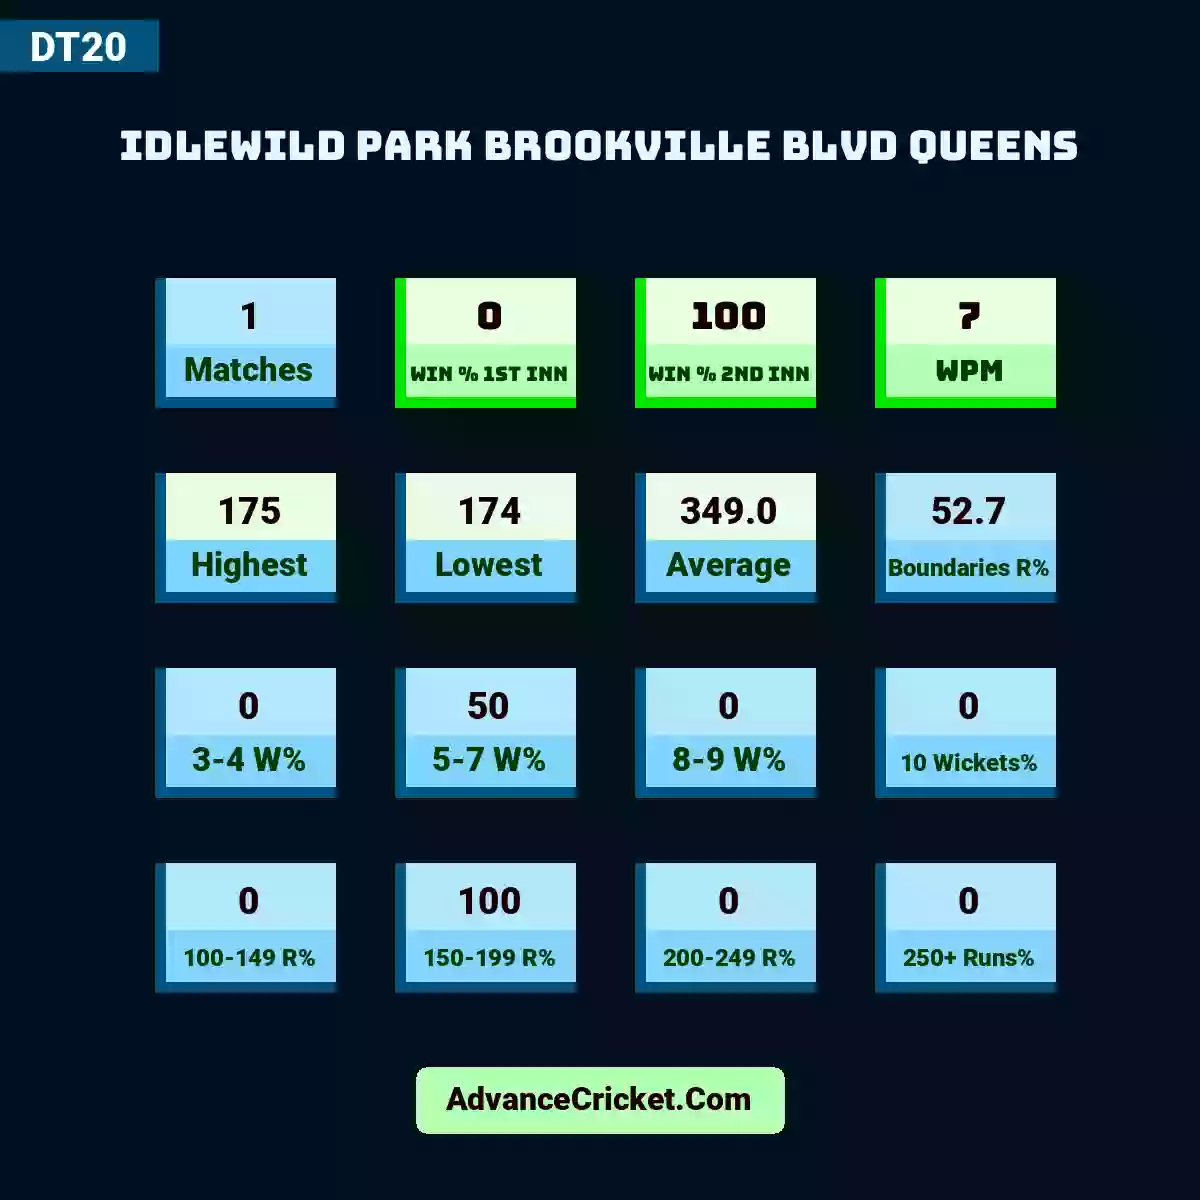 Image showing Idlewild Park Brookville Blvd Queens with Matches: 1, Win % 1st Inn: 0, Win % 2nd Inn: 100, WPM: 7, Highest: 175, Lowest: 174, Average: 349.0, Boundaries R%: 52.7, 3-4 W%: 0, 5-7 W%: 50, 8-9 W%: 0, 10 Wickets%: 0, 100-149 R%: 0, 150-199 R%: 100, 200-249 R%: 0, 250+ Runs%: 0.